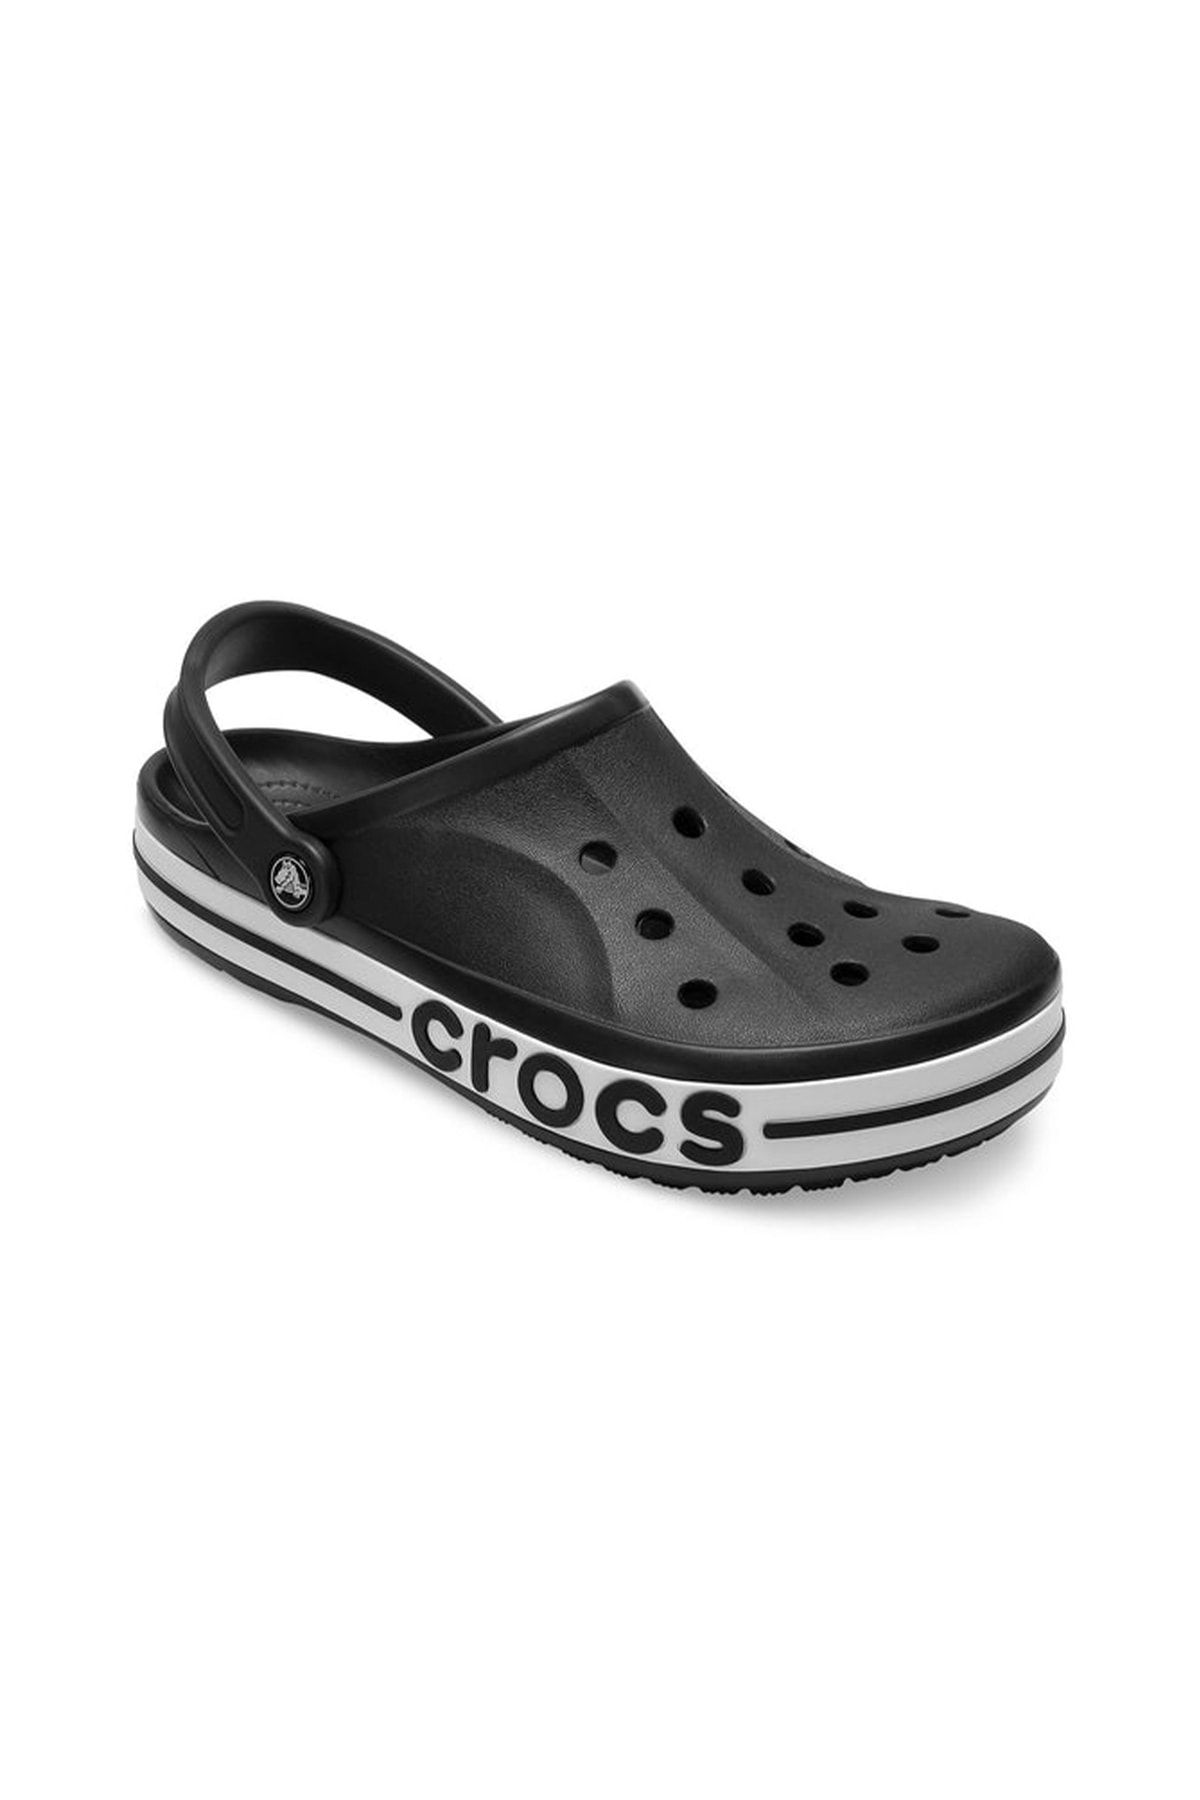 Crocs لغزنده